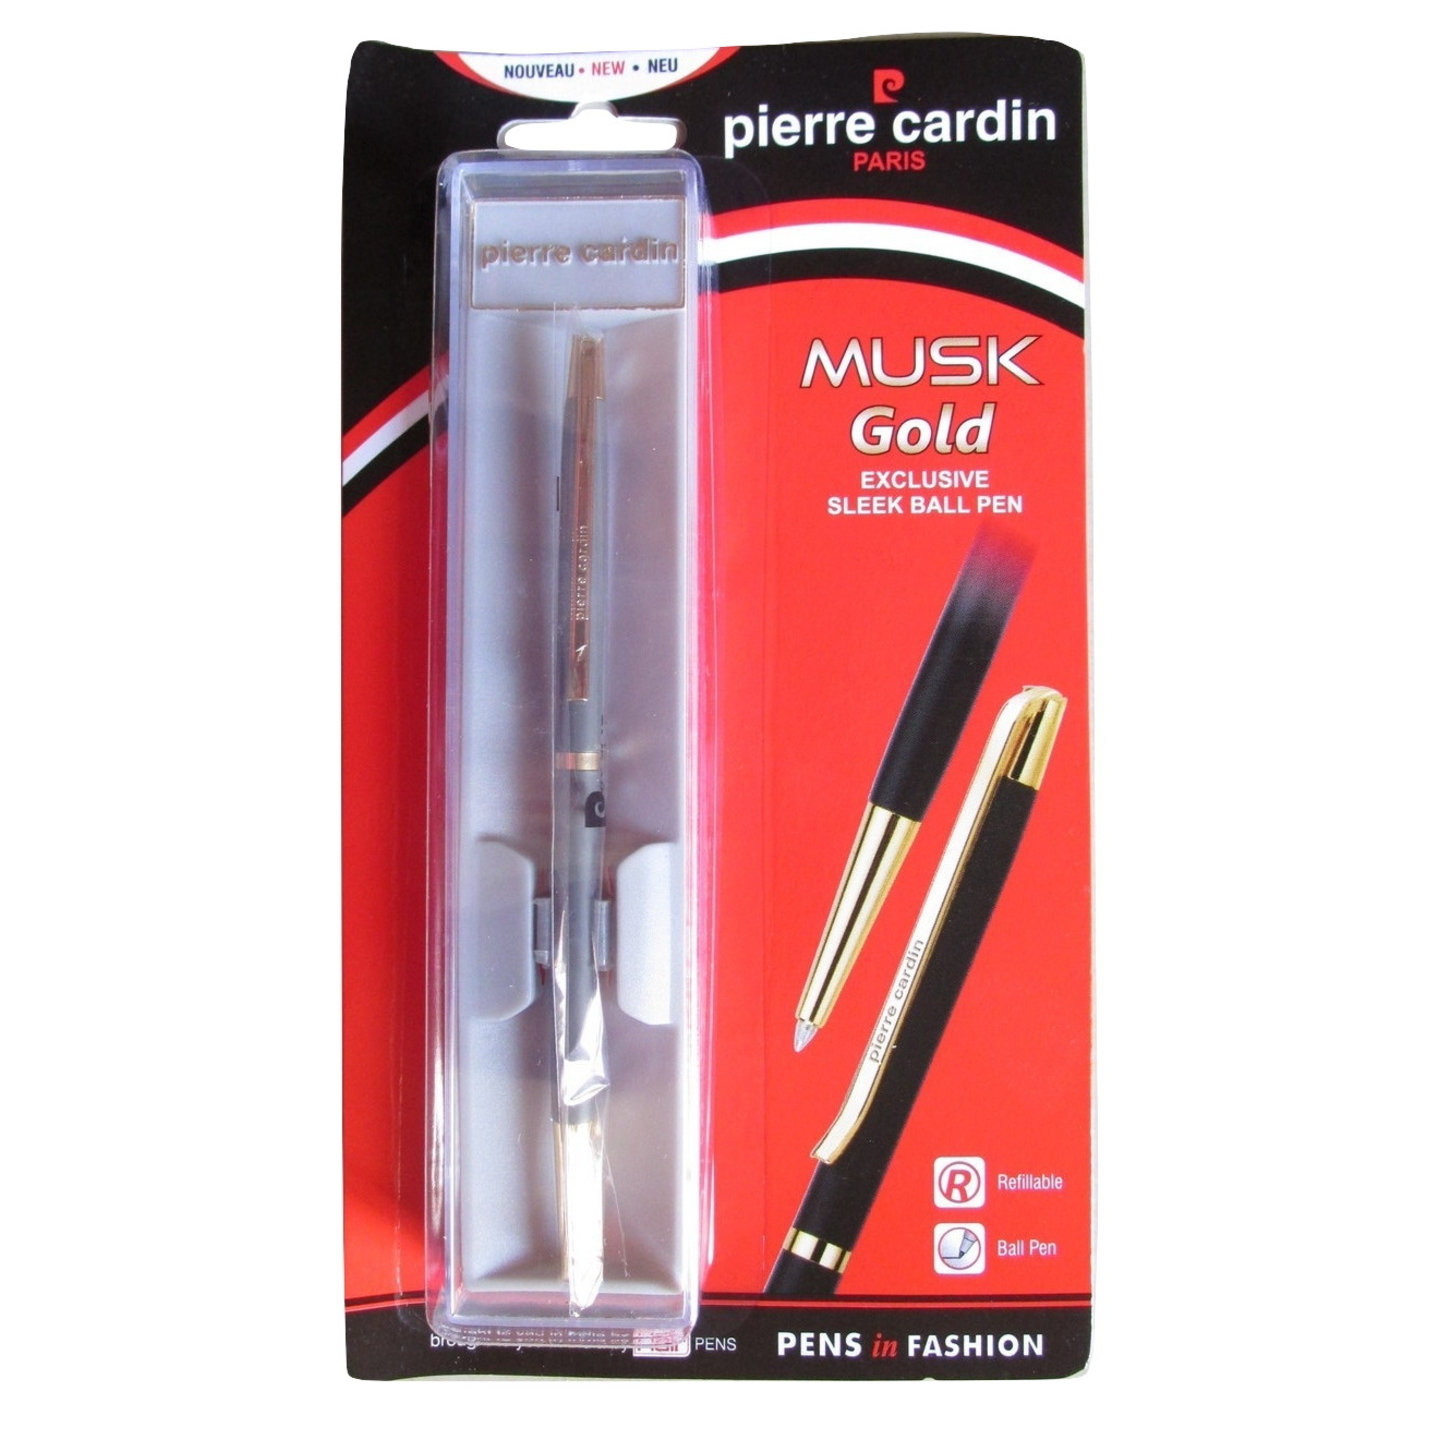 Pierre Cardin Musk Gold Exclusive Ball Pen